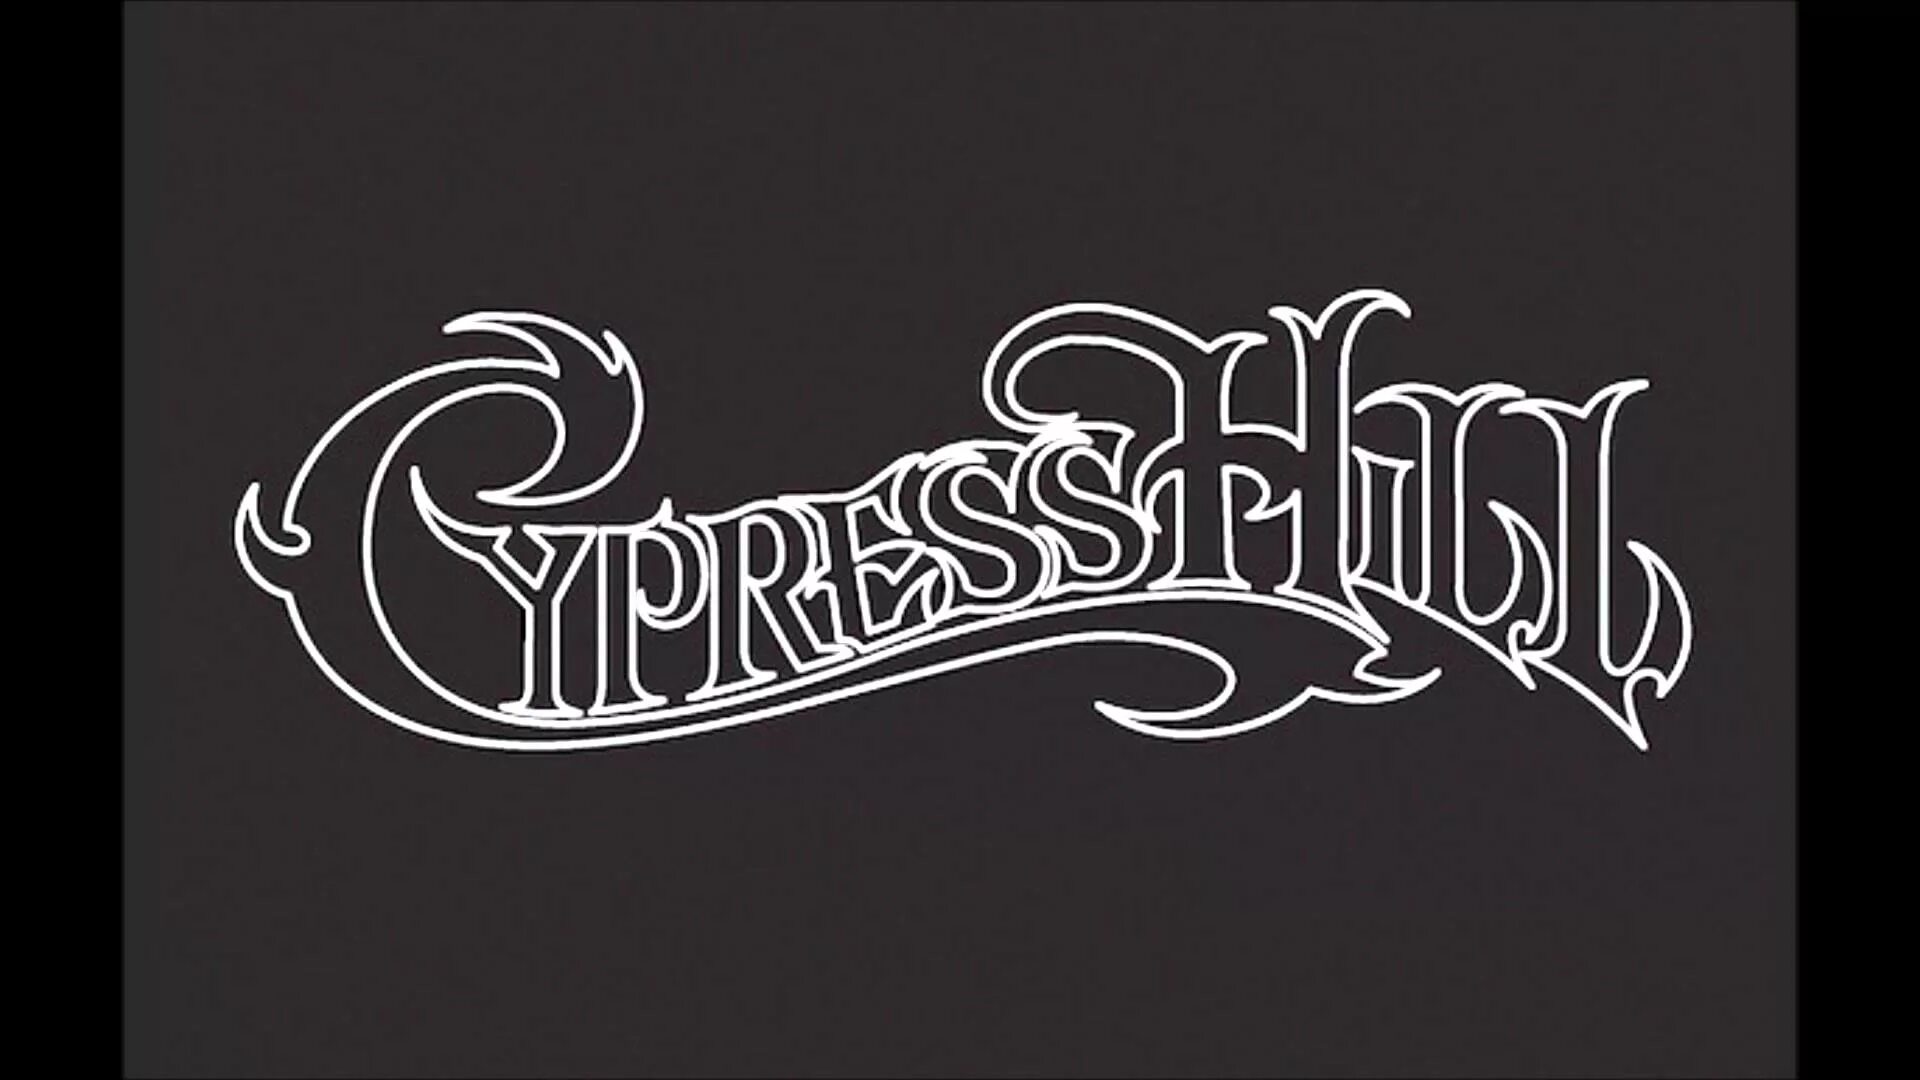 Cypress hill brain. Сайпресс Хилл обои. Лого Cypress Hill. Cypress Hill шрифт. Cypress Hill обои на телефон.